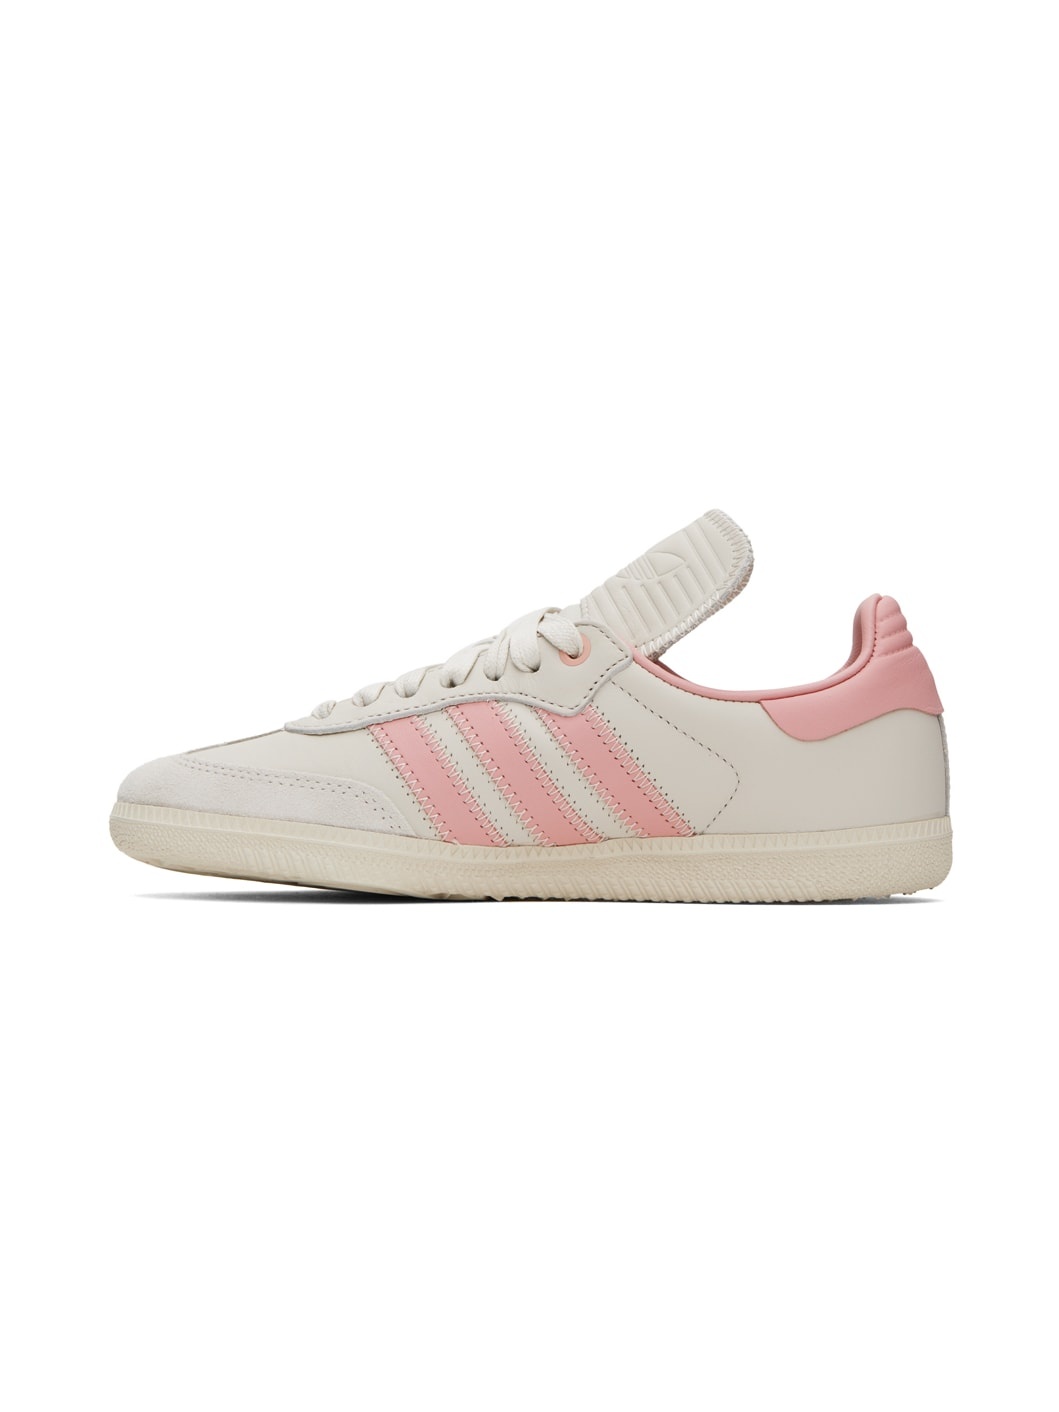 Off-White & Pink Humanrace Samba Sneakers - 3